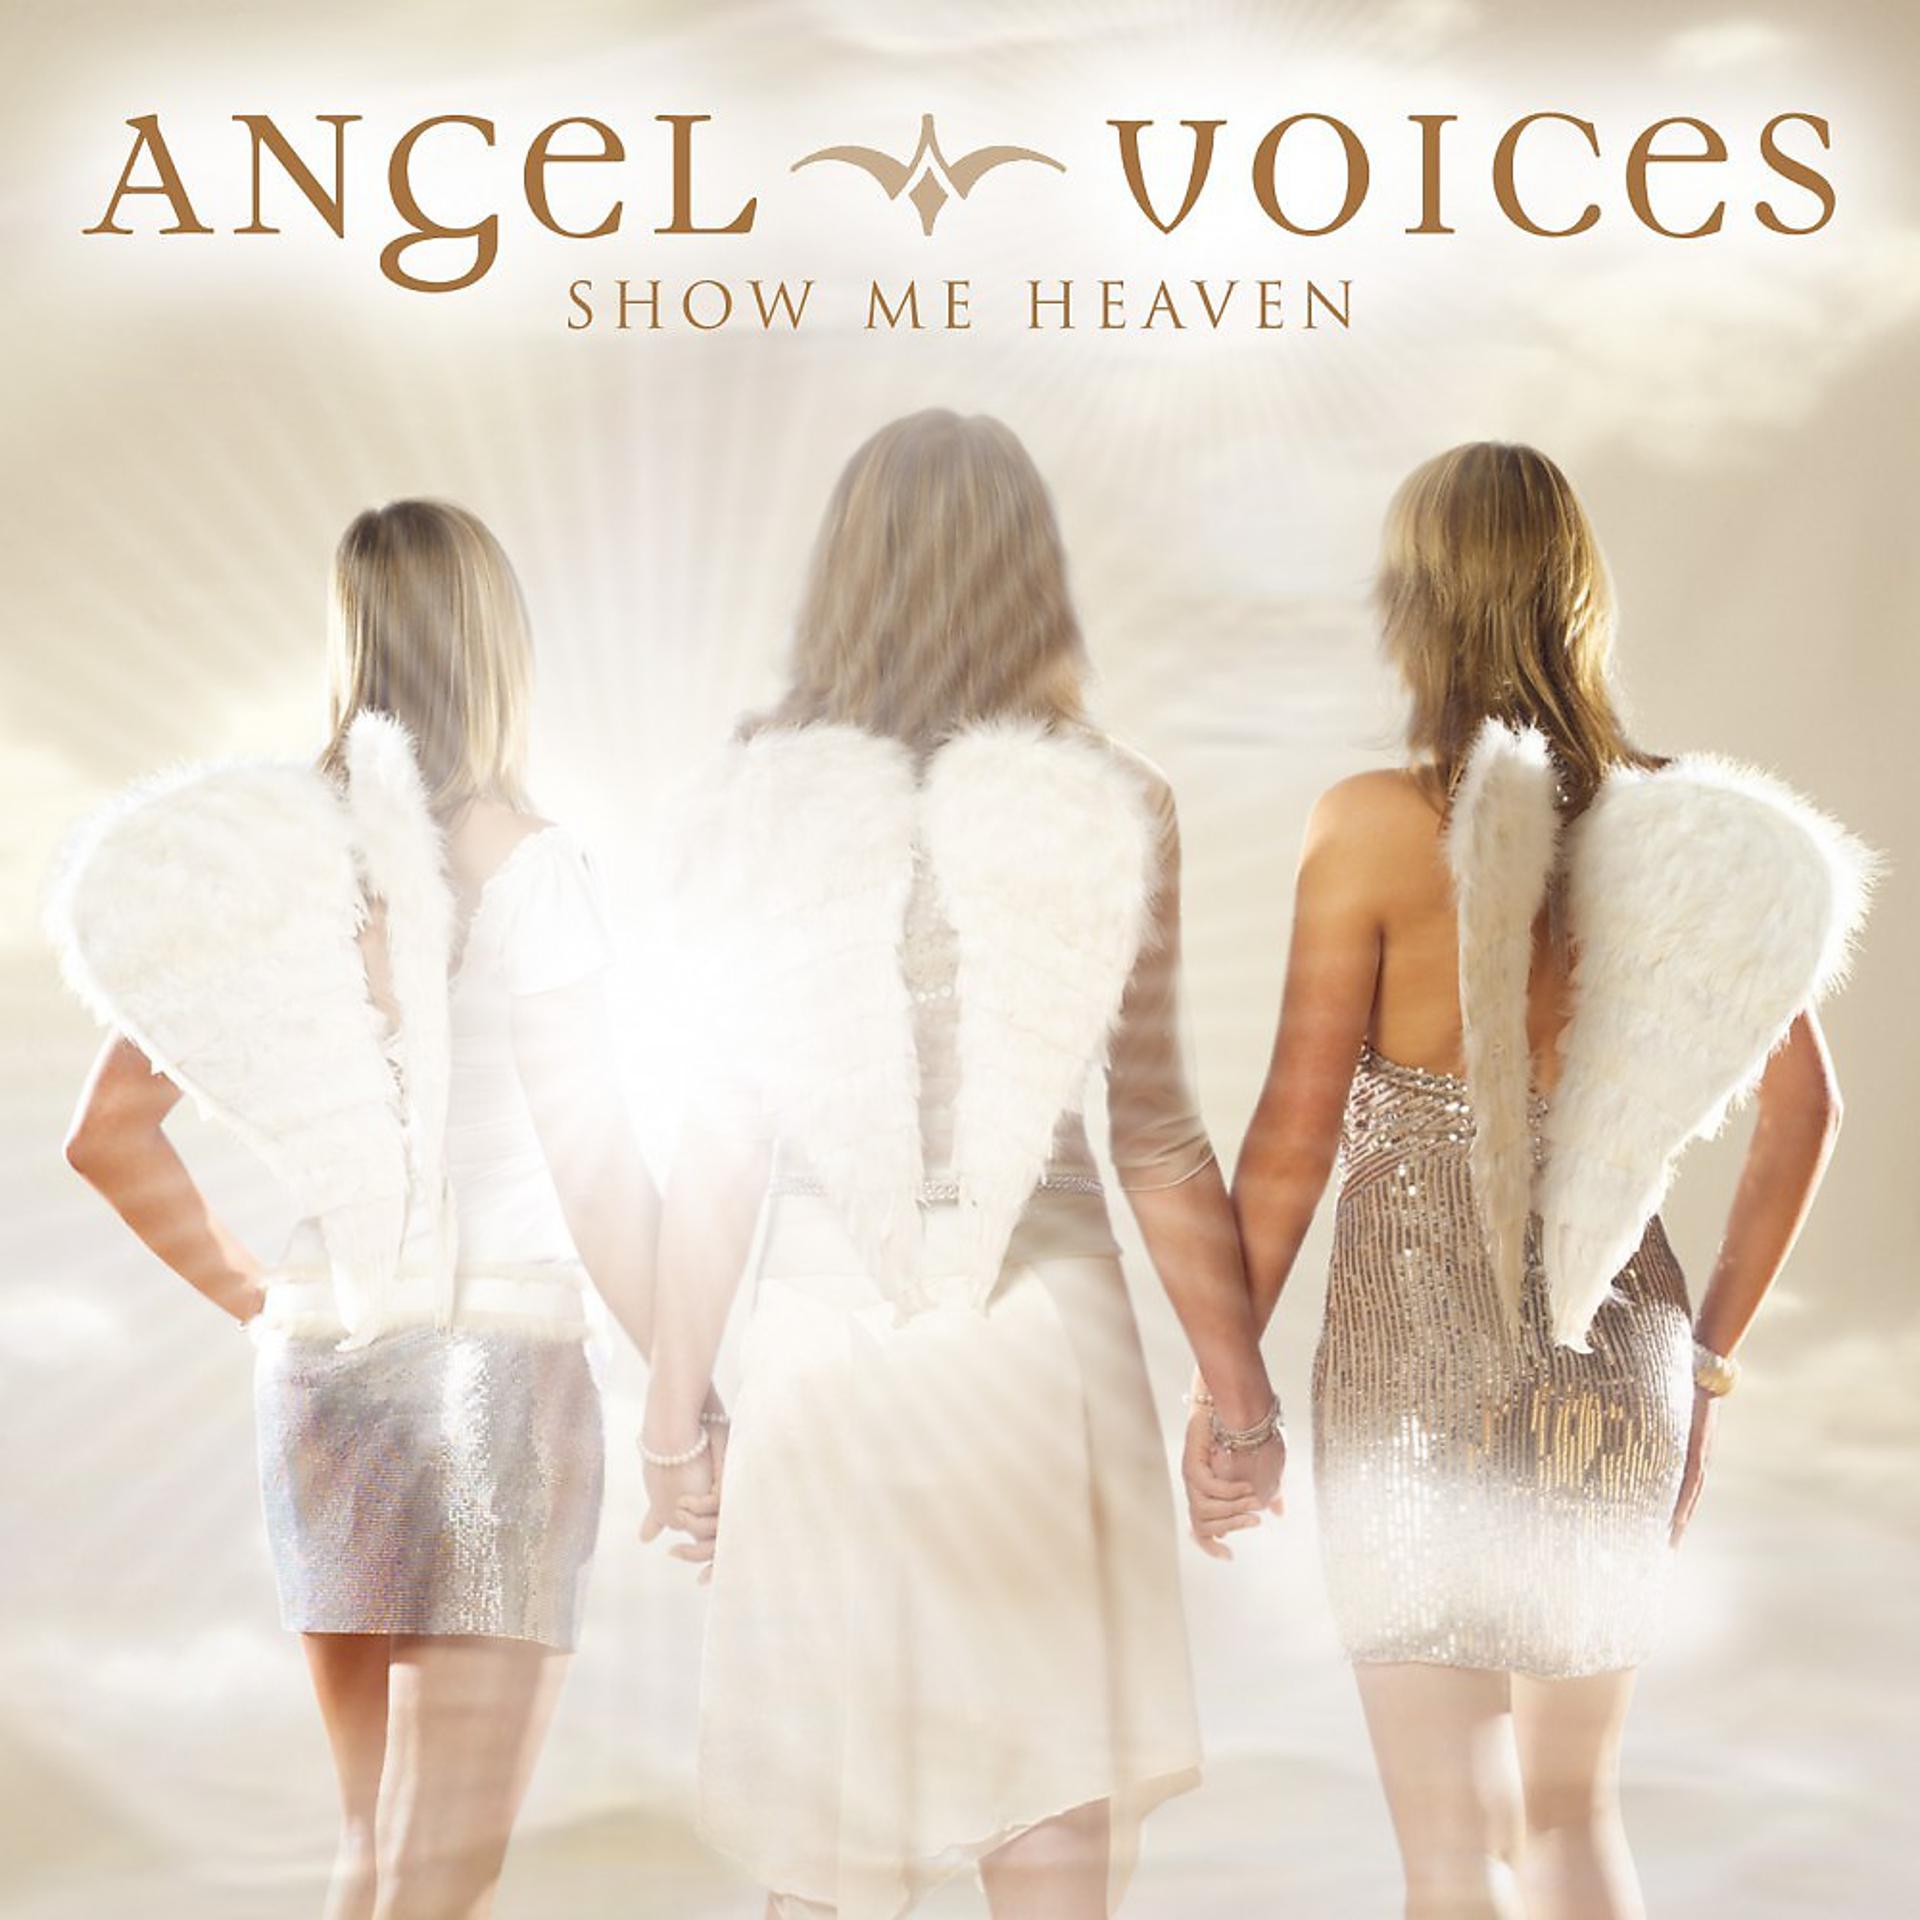 Angel Voice. Angelic Voices альбом. Рок Angelic Voices альбом. Песня Angel. Мы не ангелы песня слушать